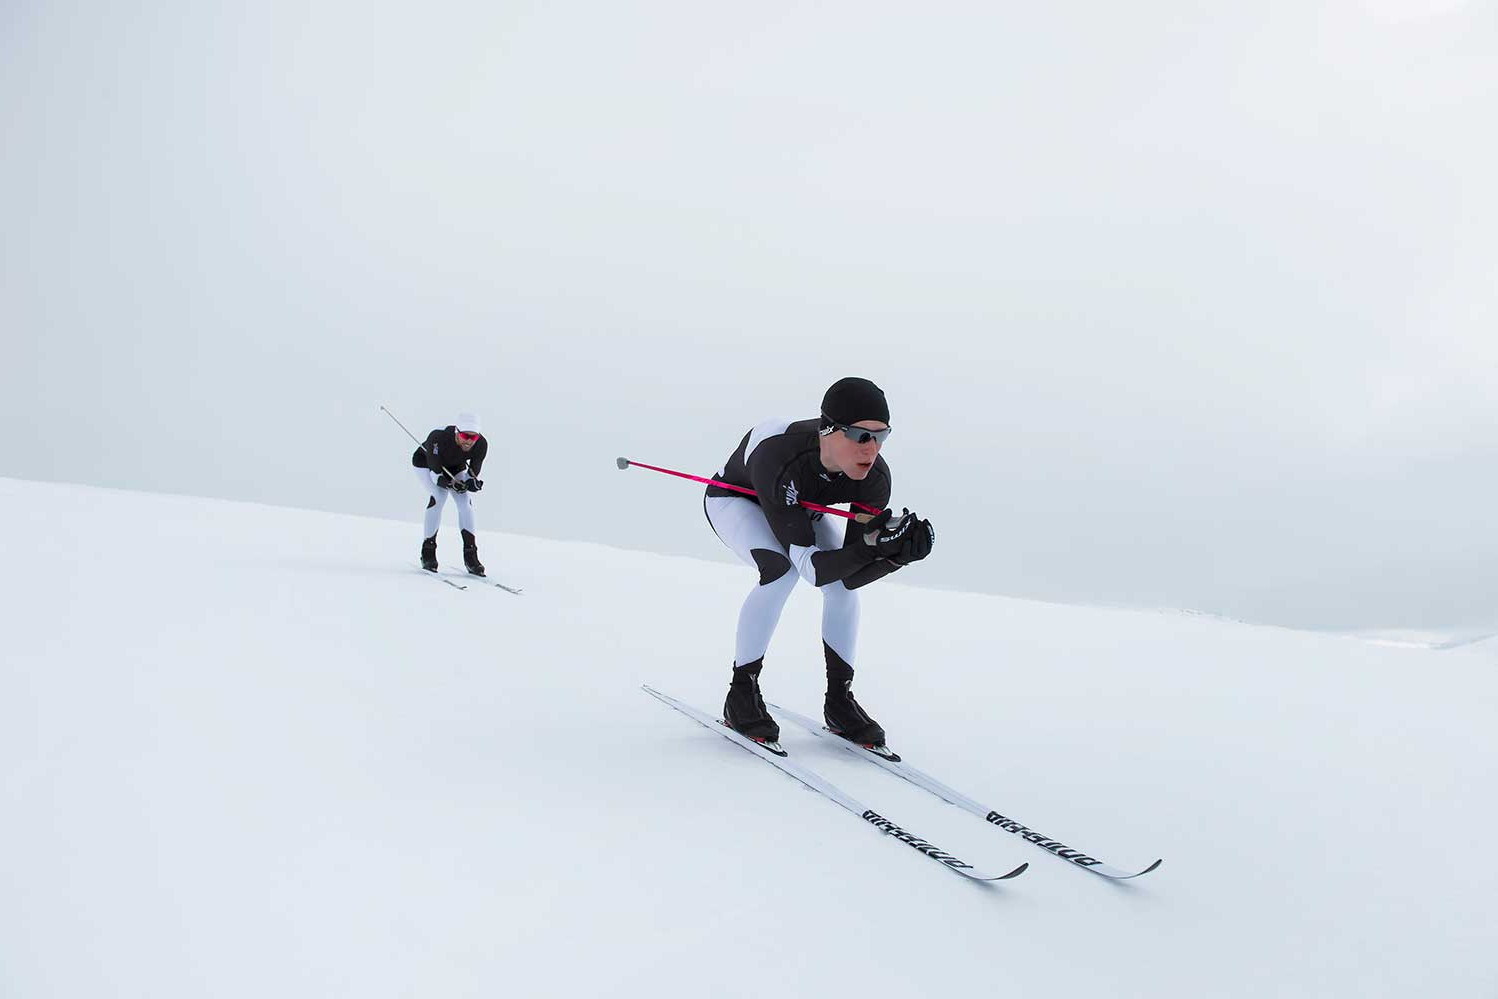 semcon electronic ski binding faster glide downhill